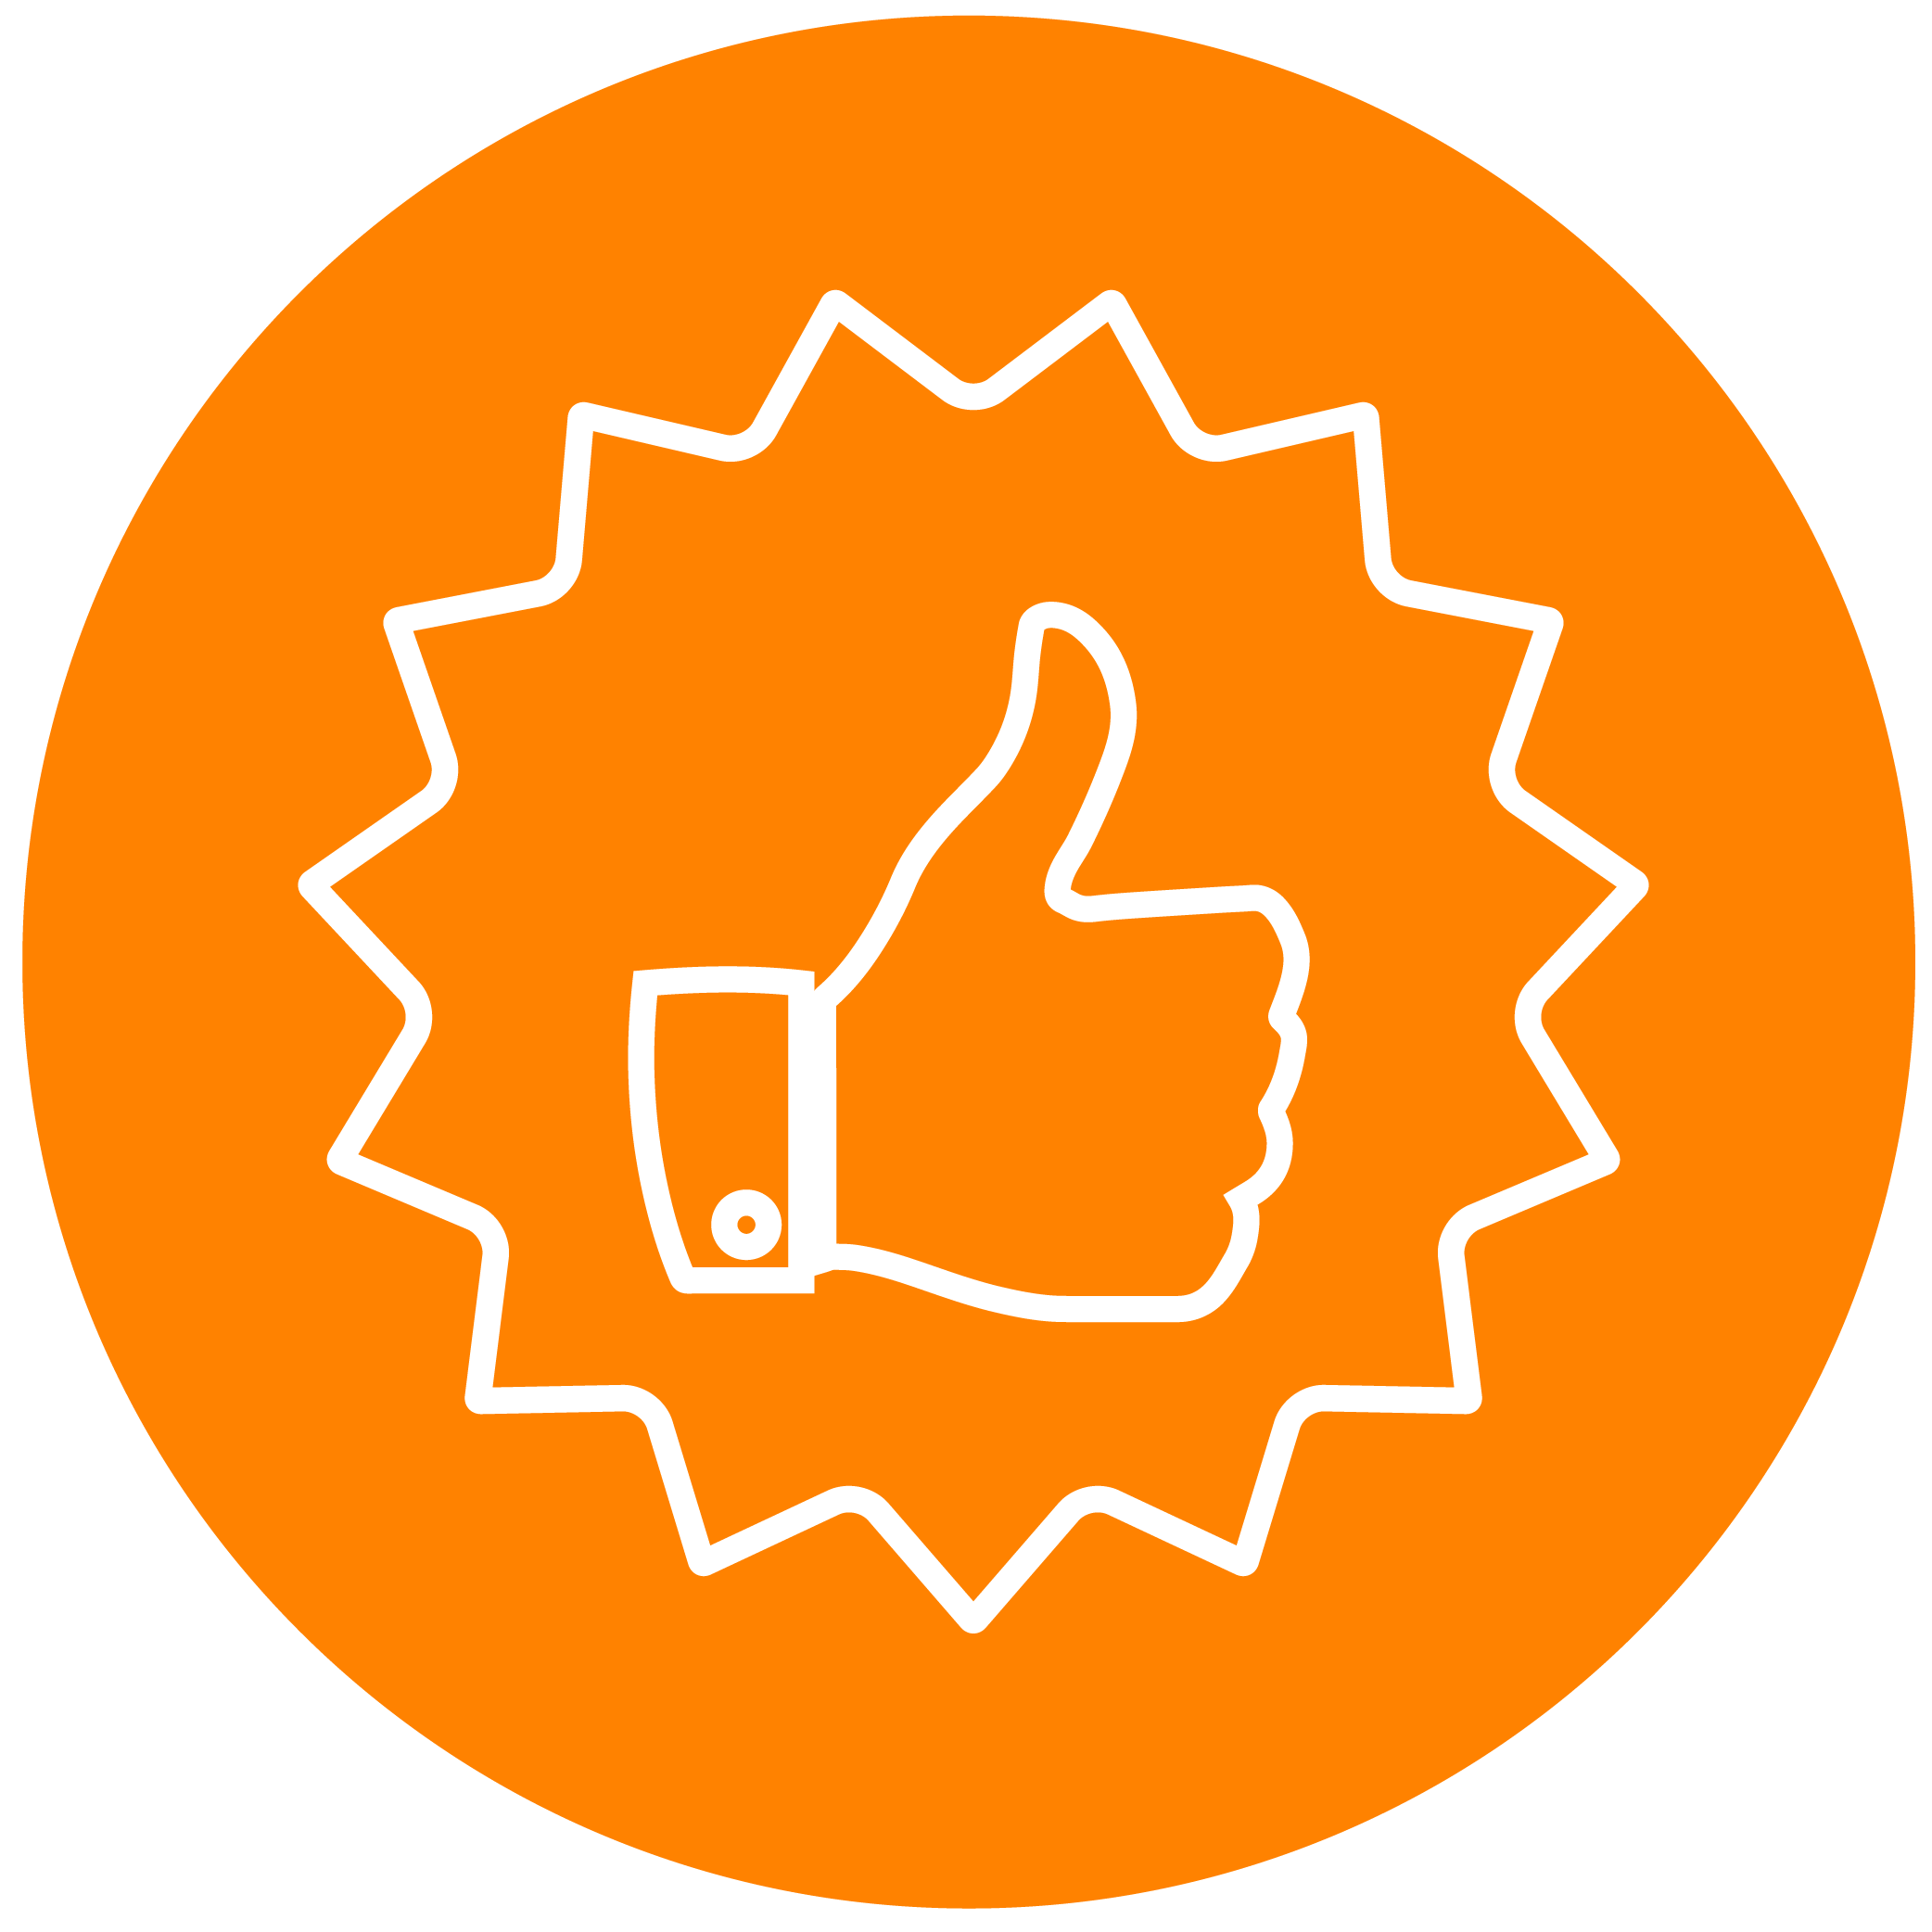 White Thumbs-up icon on orange background